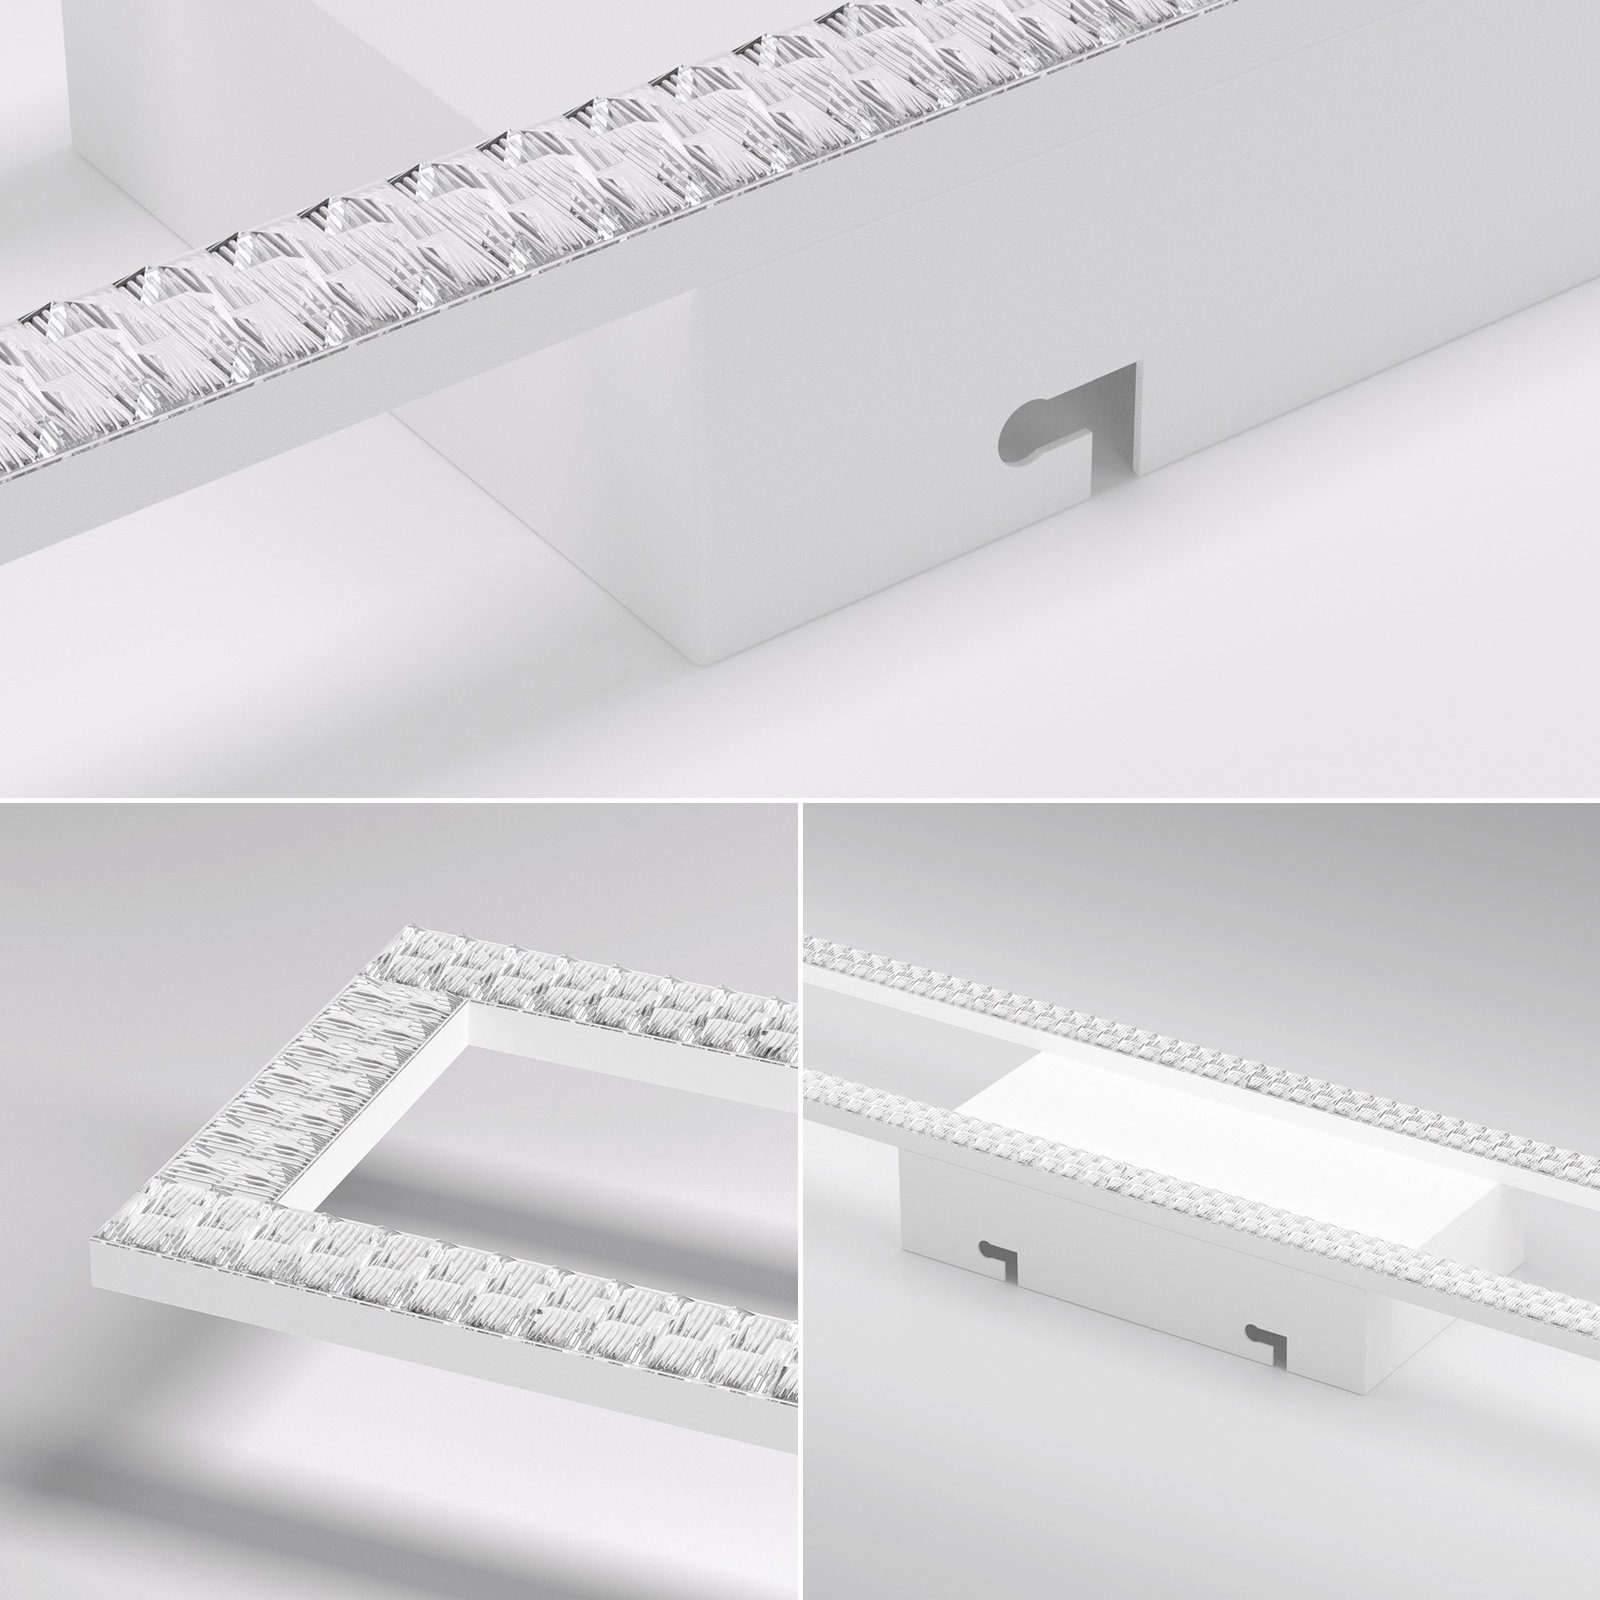 integriert Deckenbeleuchtung, LED W LED Nettlife Deckenleuchte Moderne 40 Weiß mit dimmbar Fernbedienung fest